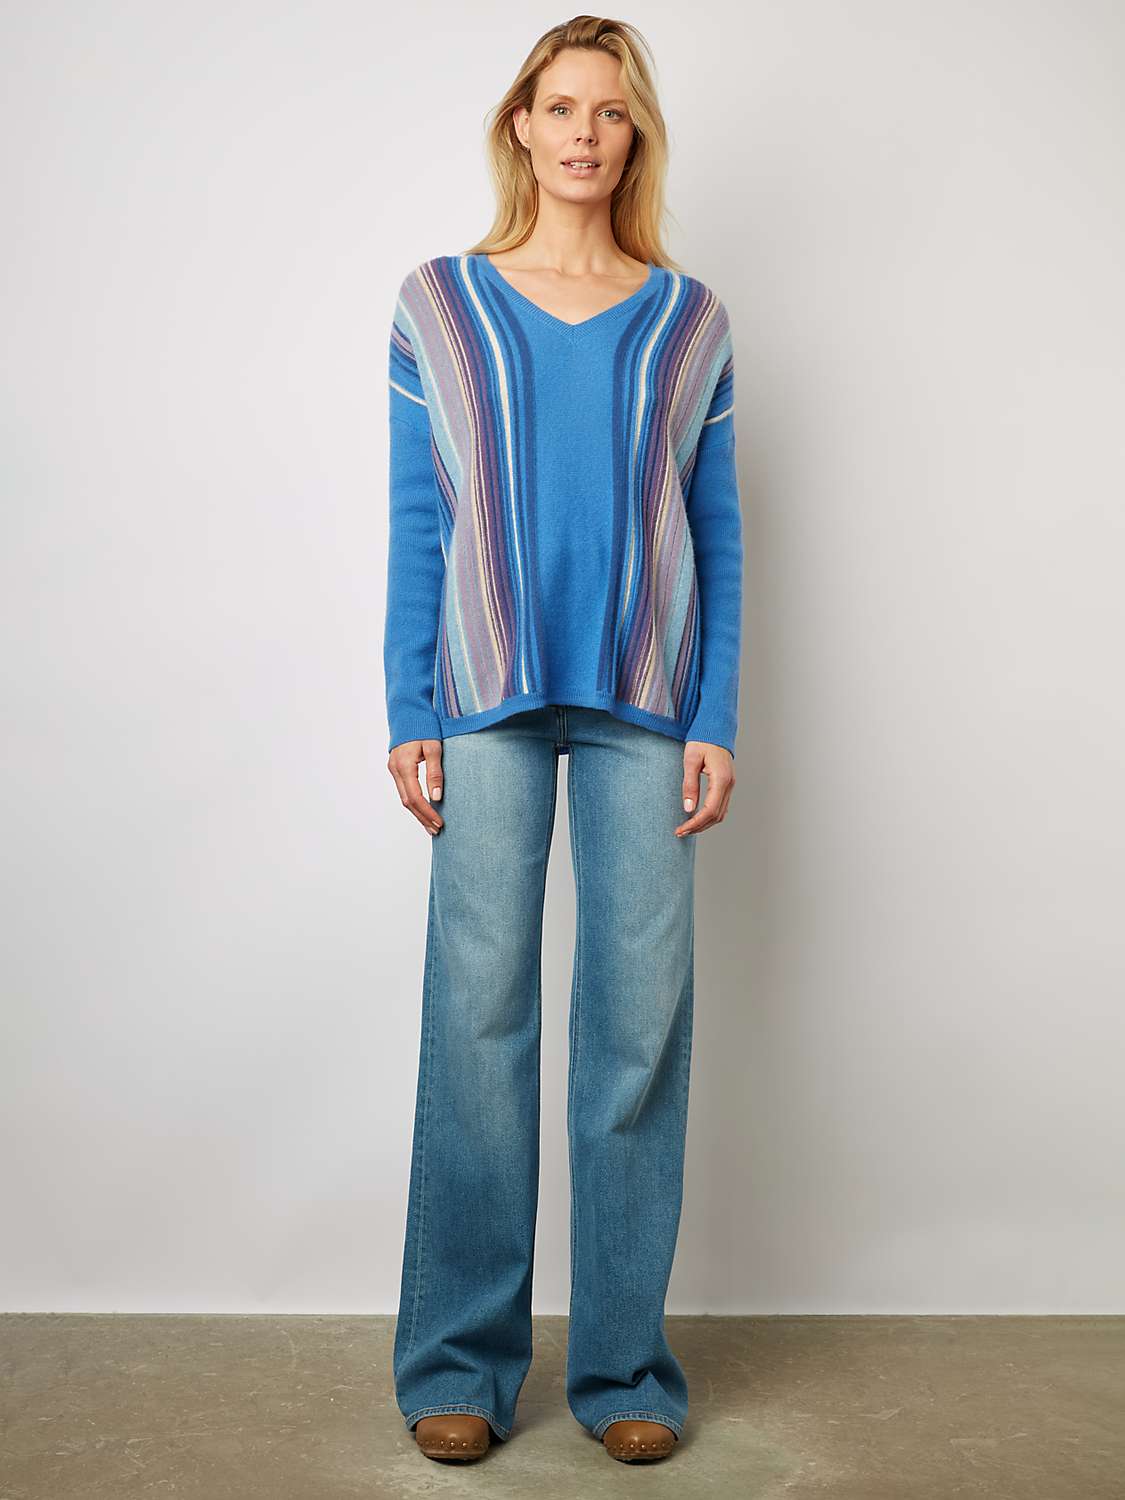 Buy Gerard Darel Lexa Striped Cashmere Jumper, Blue/Multi Online at johnlewis.com